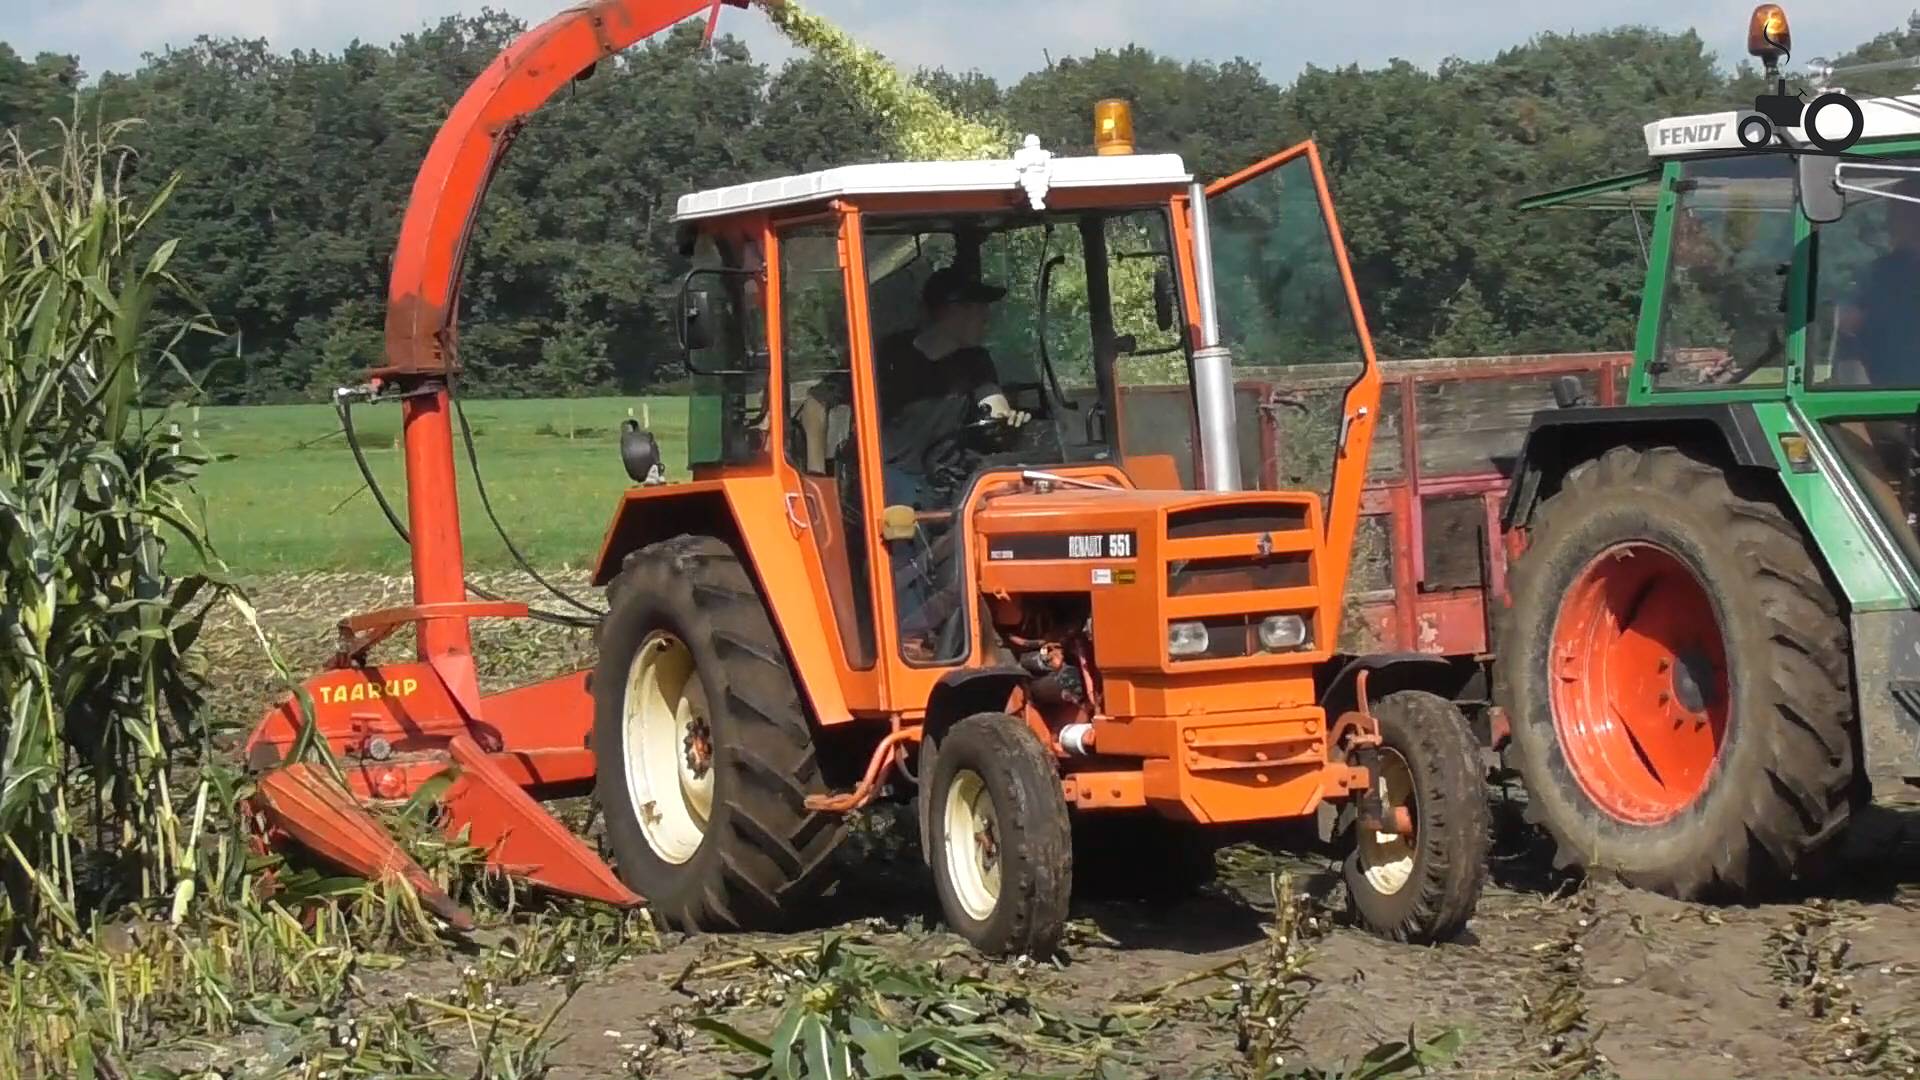 renault-551-france-tracteur-image-1193532